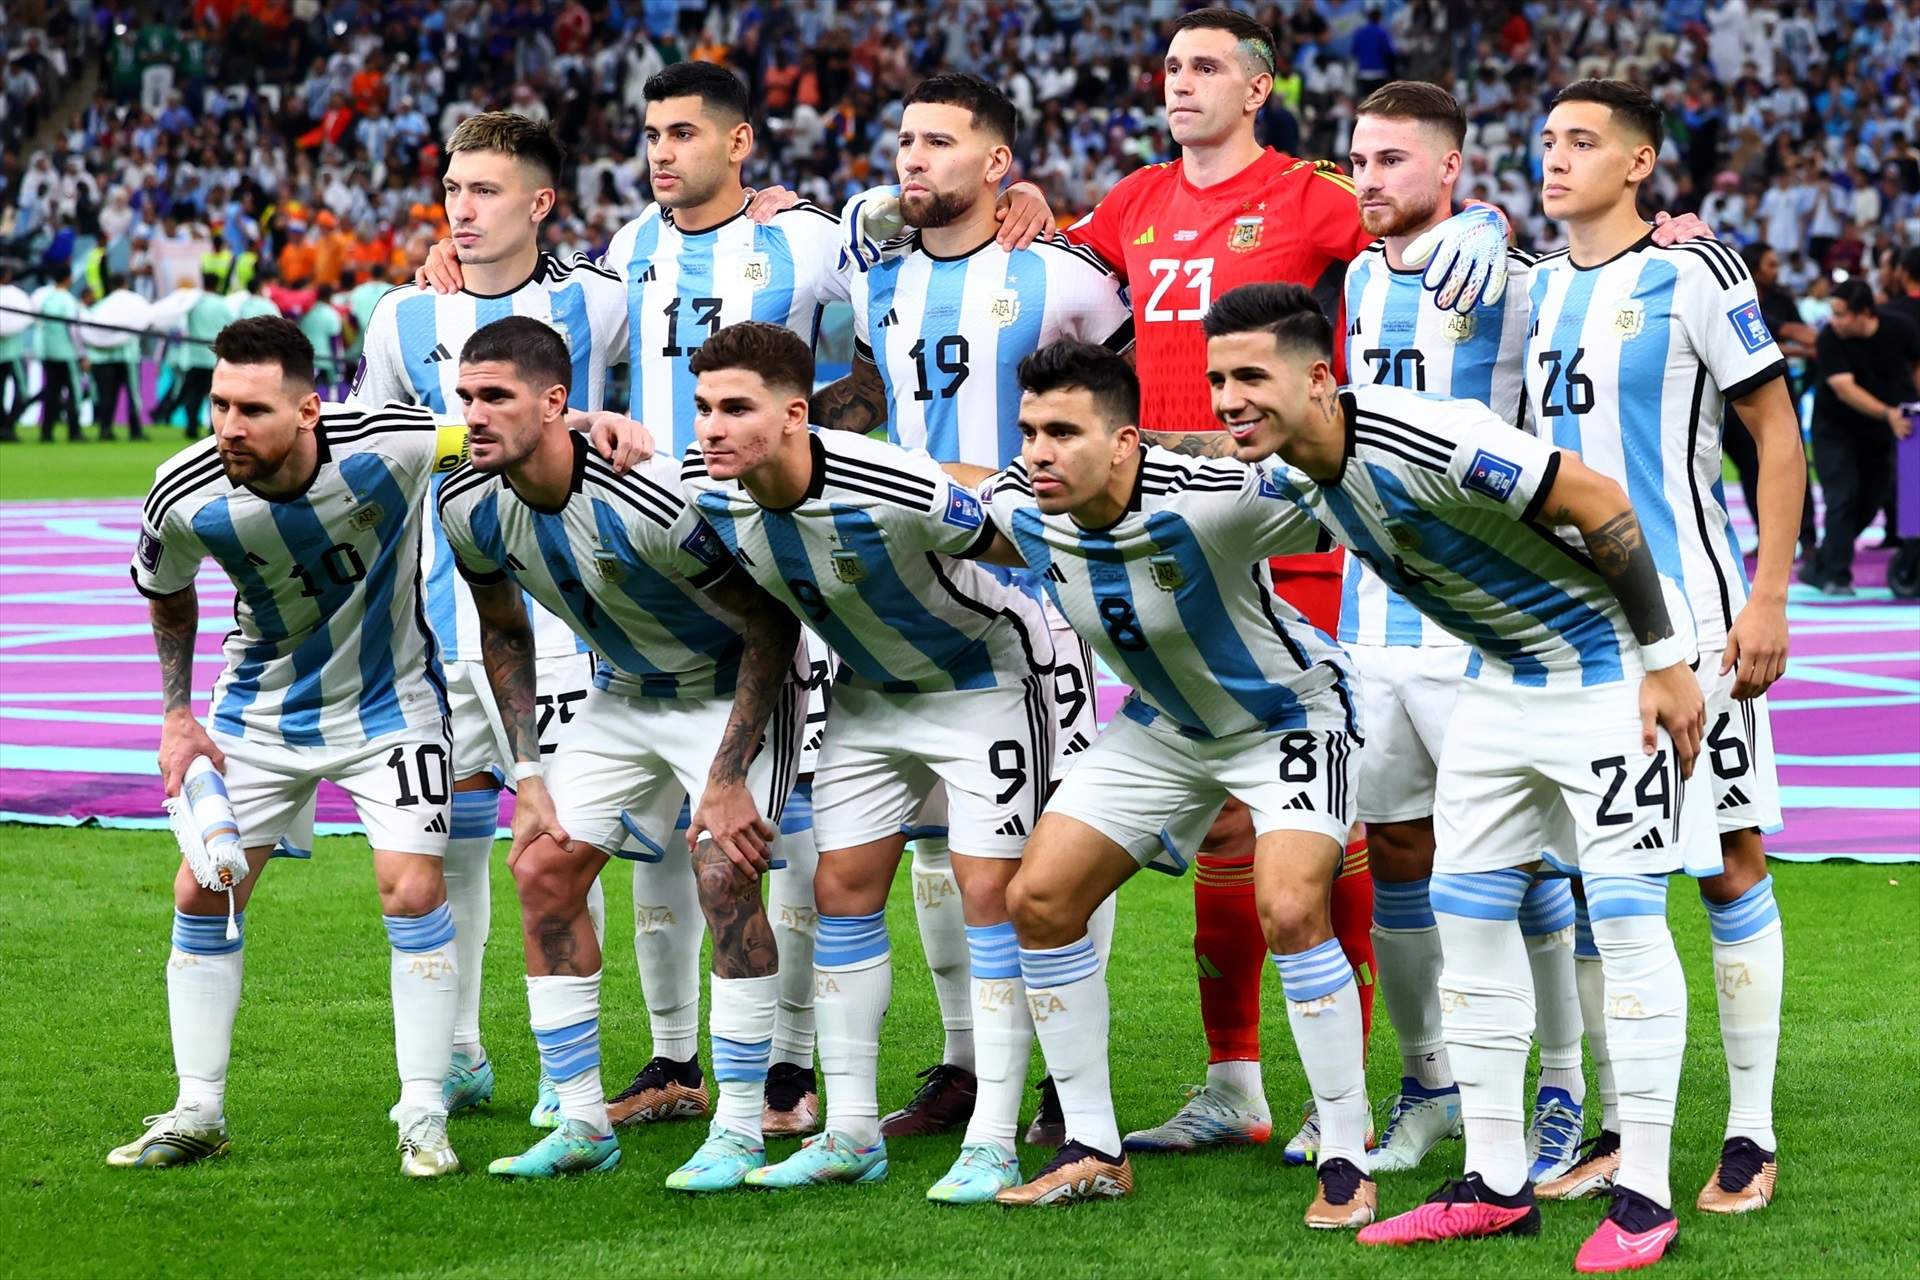 alineación de gala de la Argentina hoy para enfrentarse a Holanda, Países Bajos, capitaneados por Leo Messi